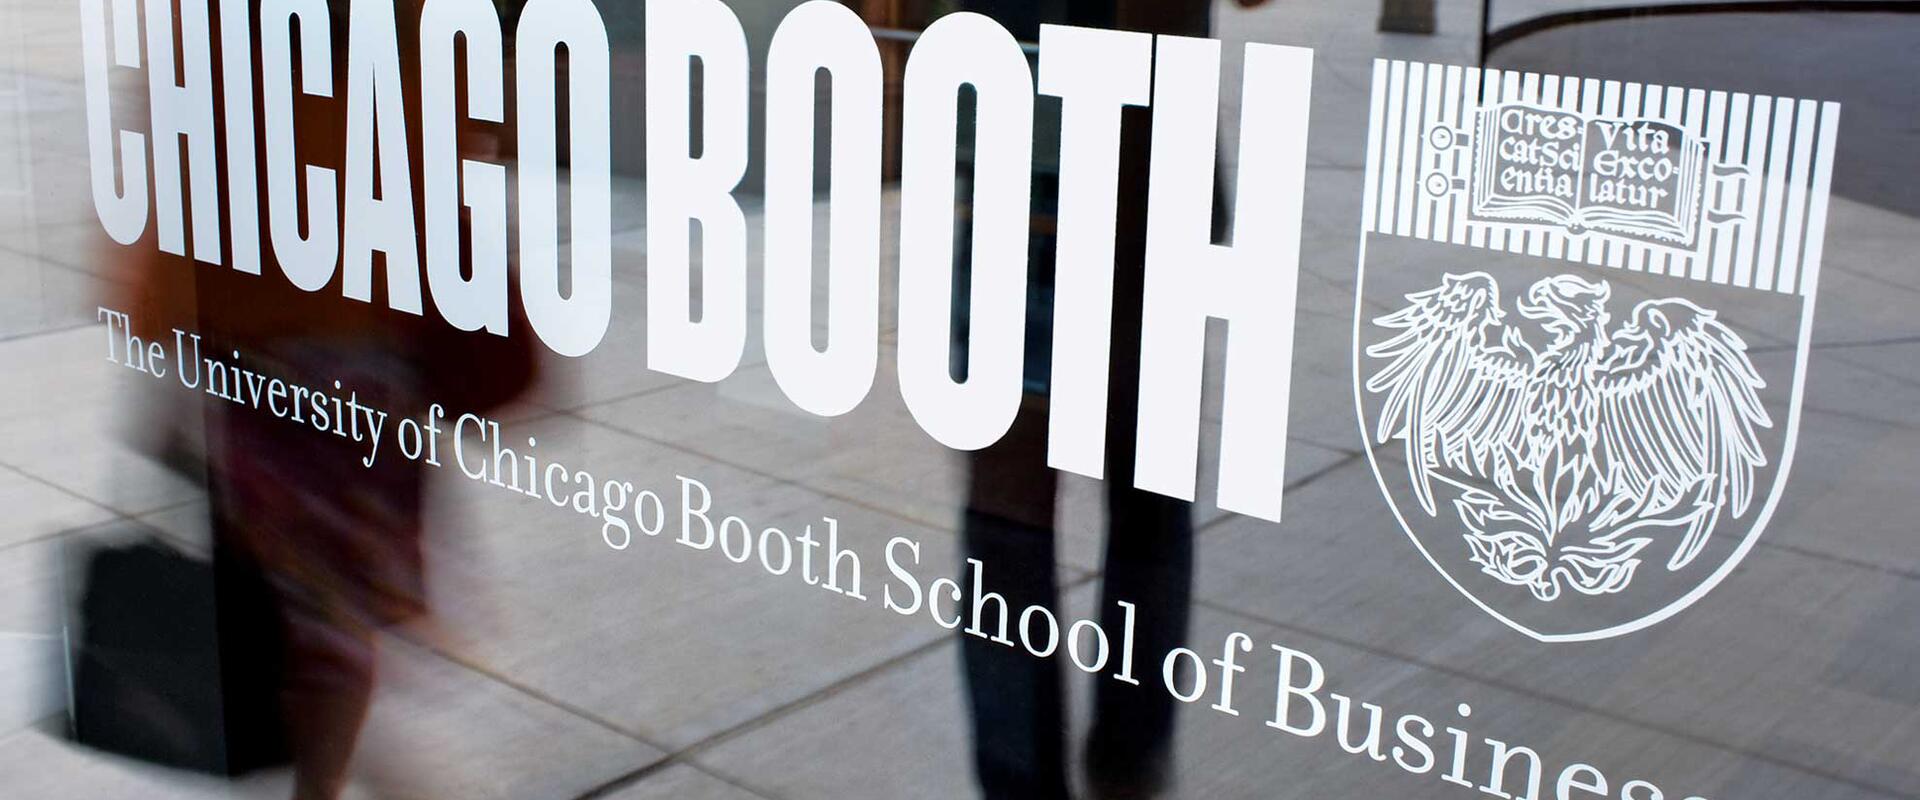 19A-61_Chicago Booth Branding Program_Bart Crosby/Jeff Mumford